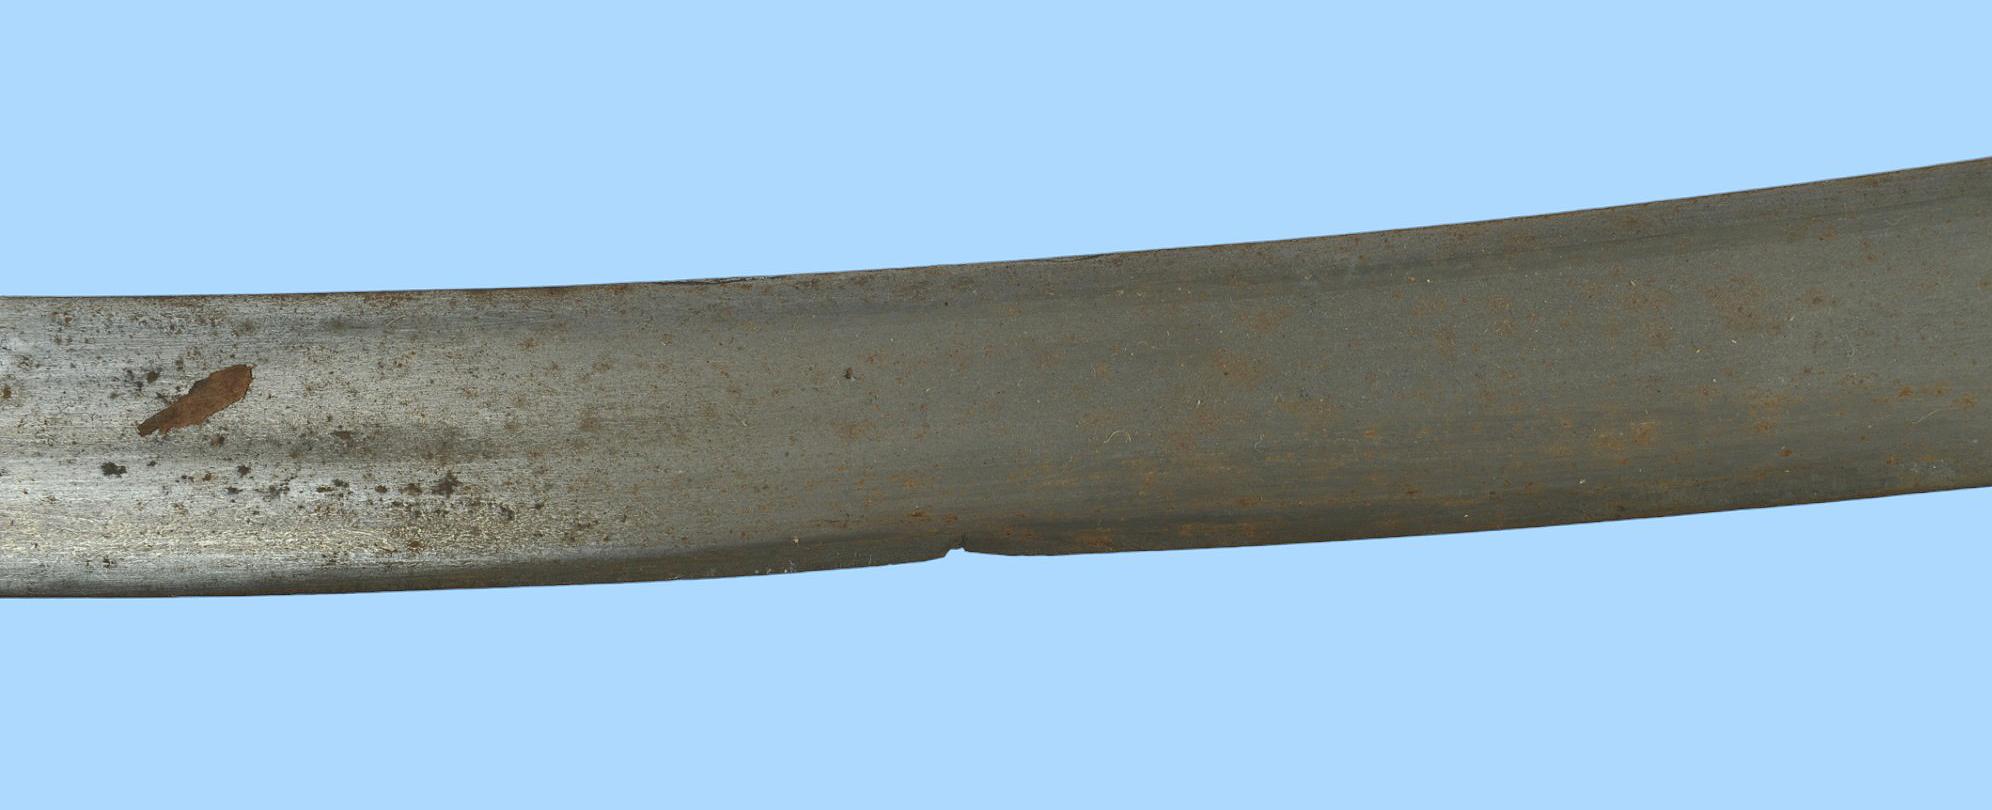 Indo-Persian Antique Tulwar Sword (MOS)